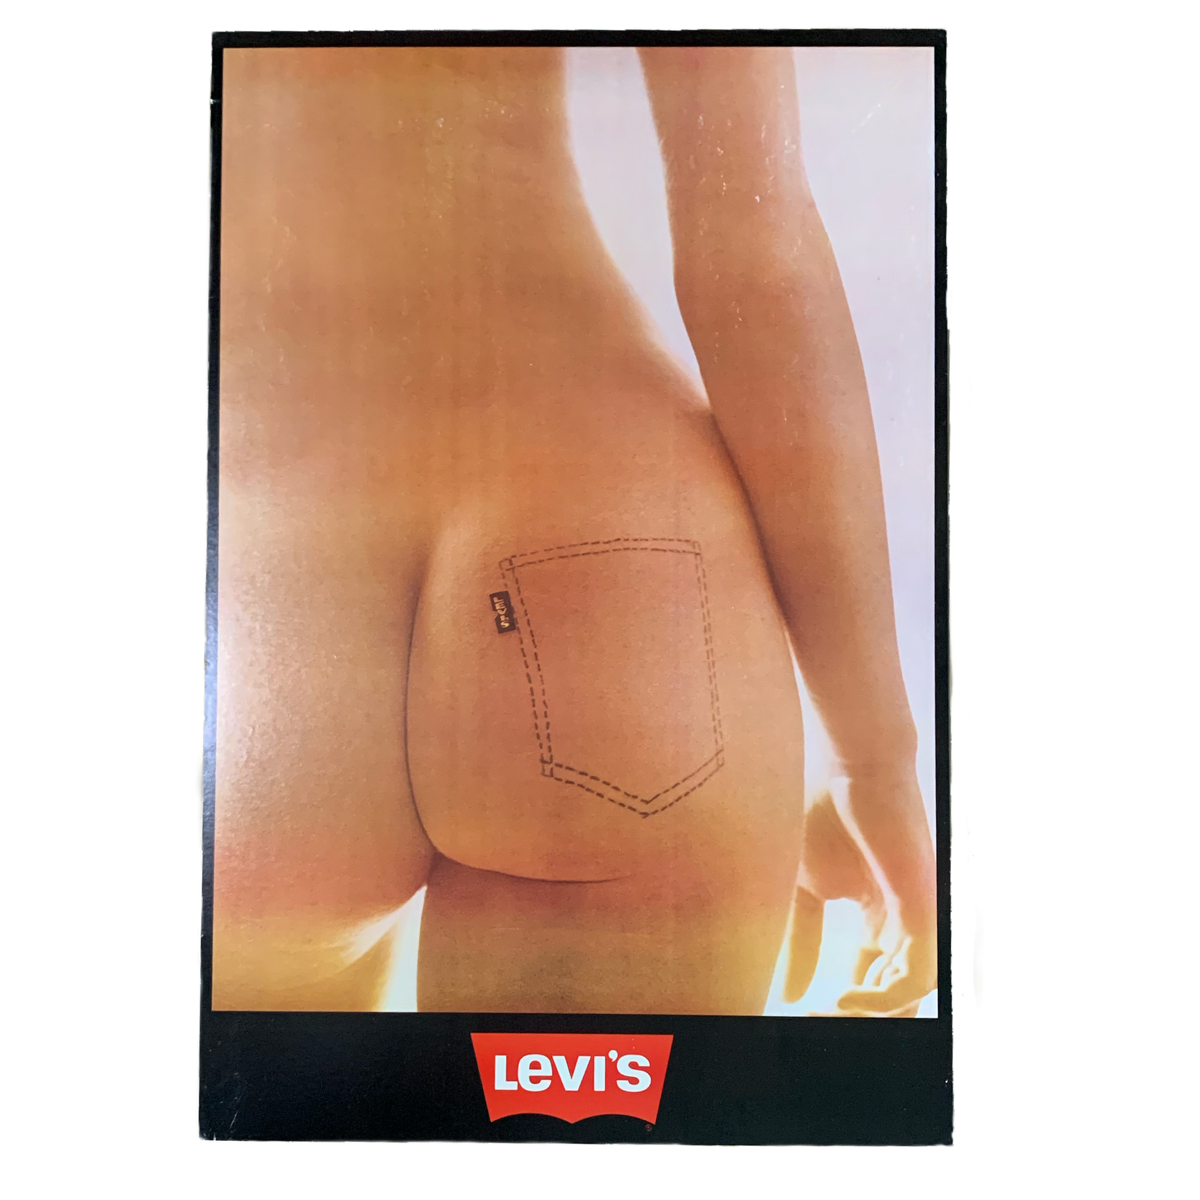 Vintage Levi’s Ida Van Bladel “Big E” Bare Butt USA Version Advertisement - jointcustodydc